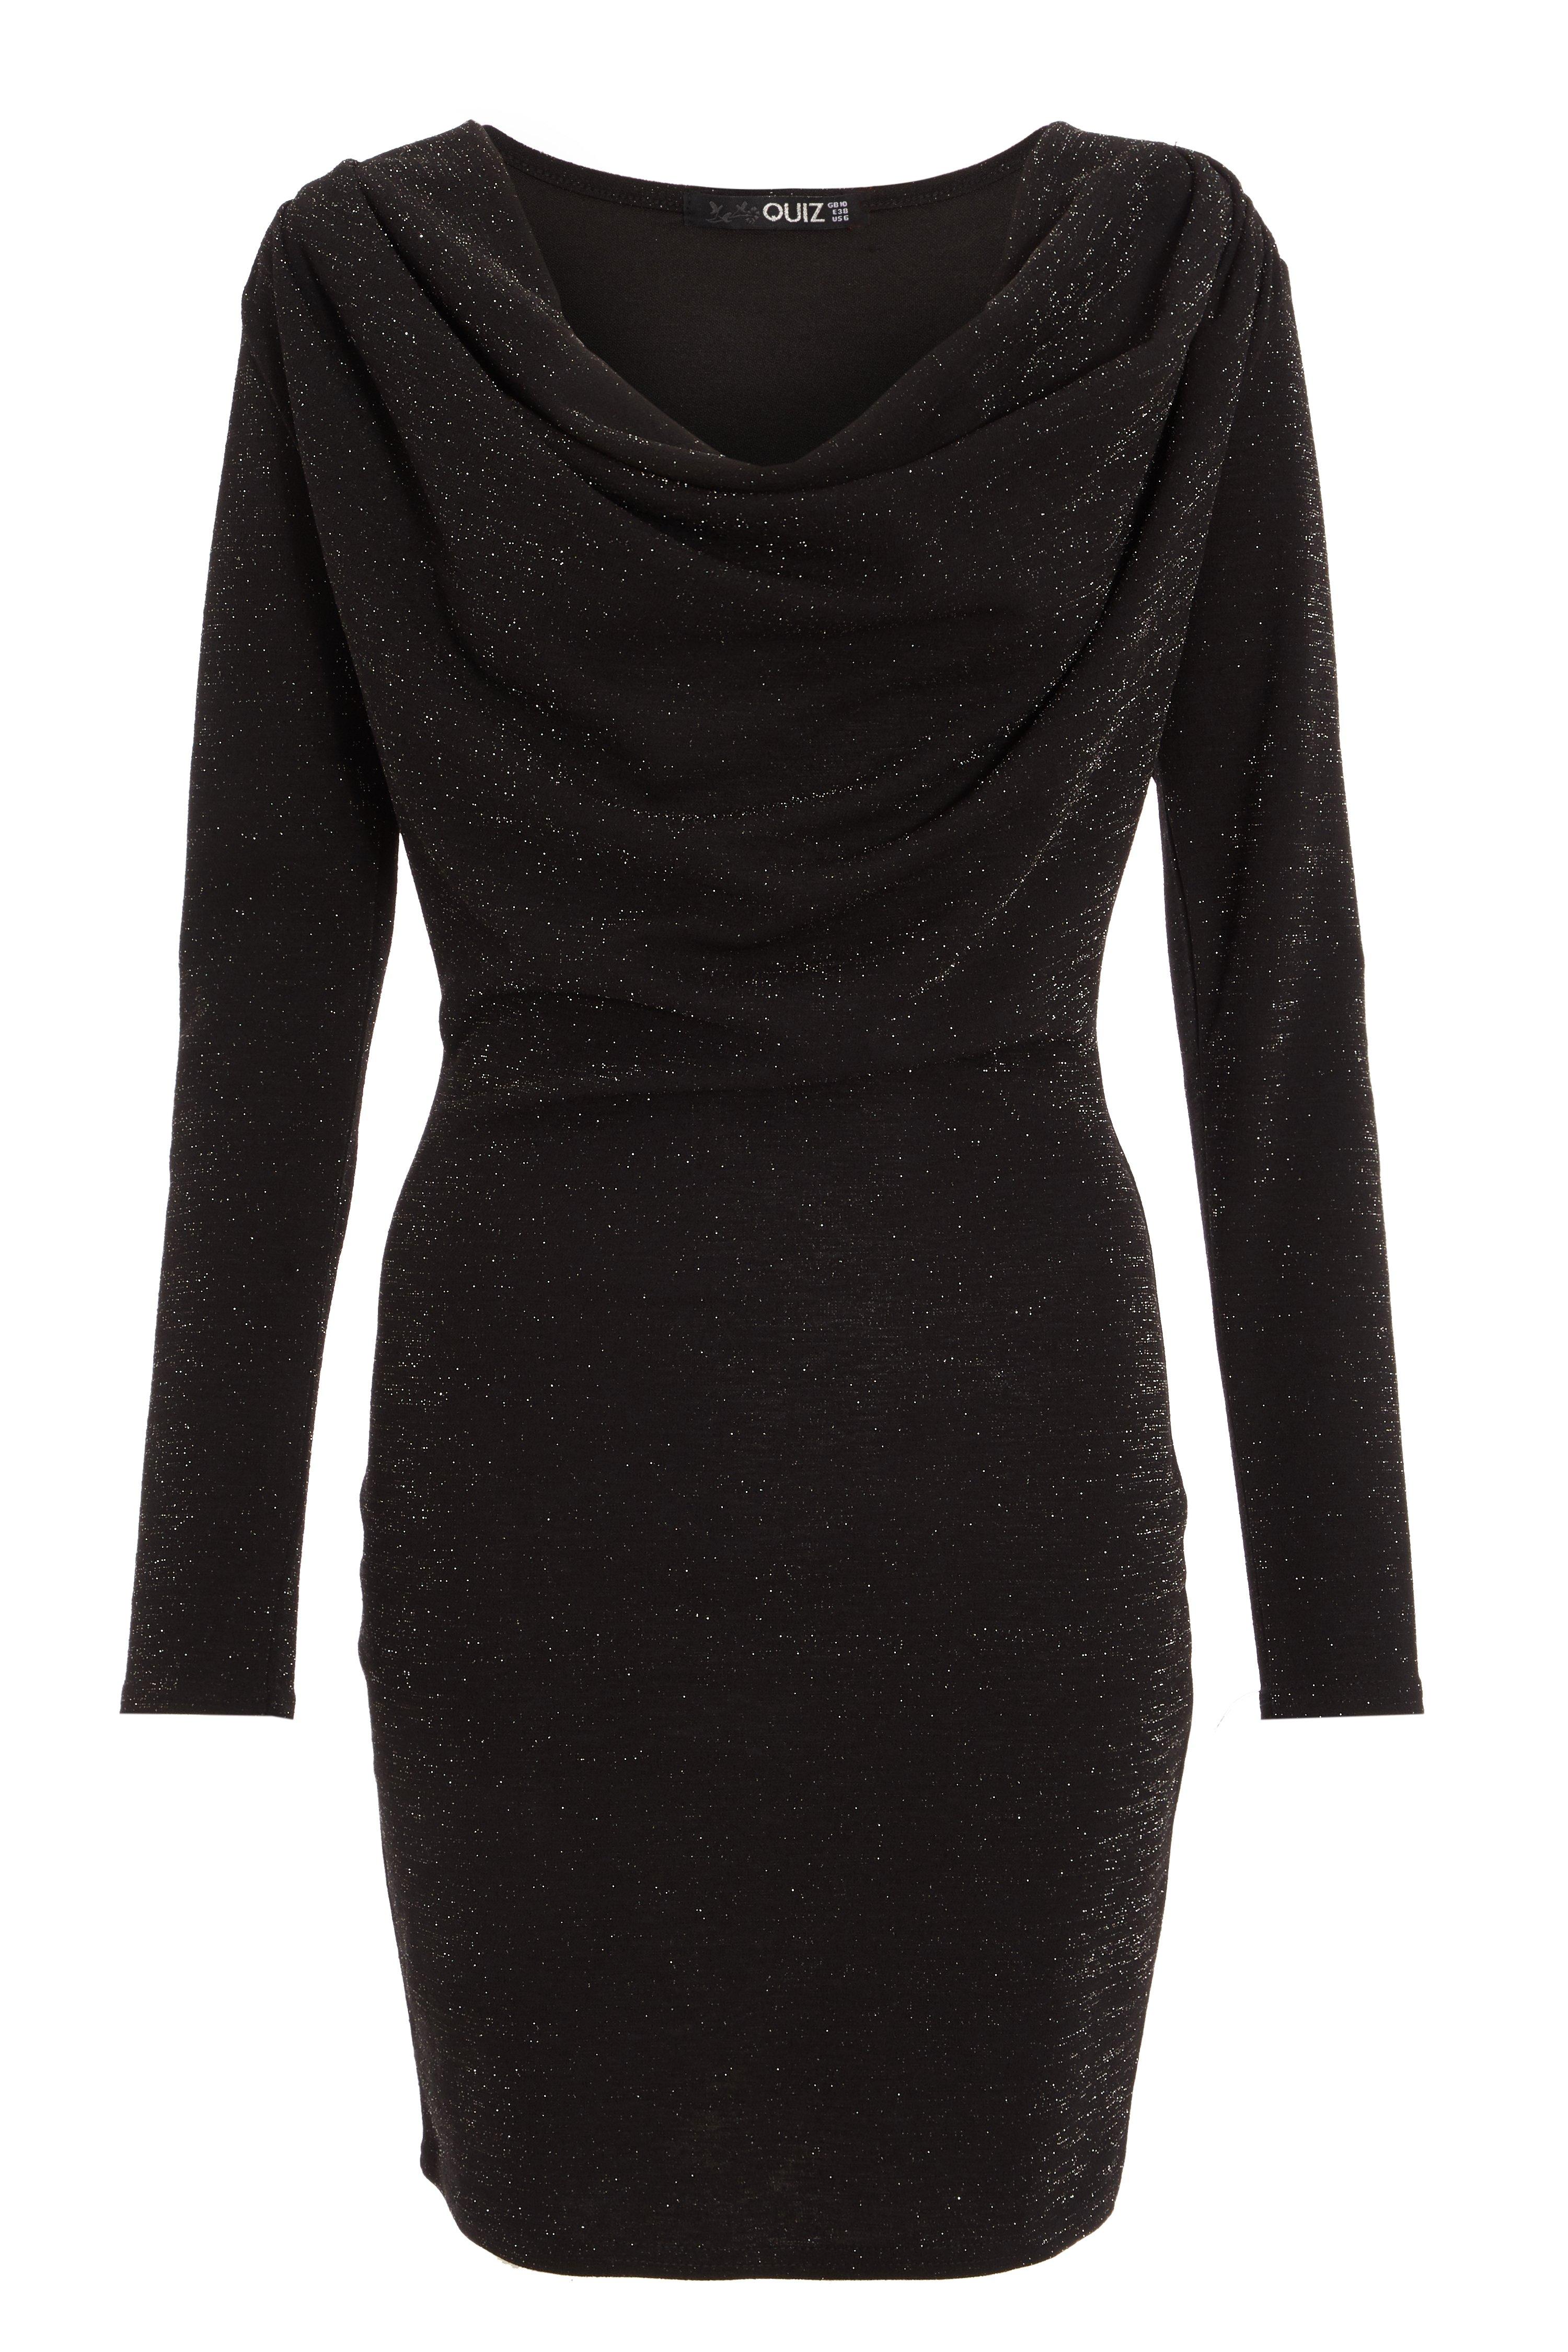 Black Glitter Cowl Neck Bodycon Dress - Quiz Clothing